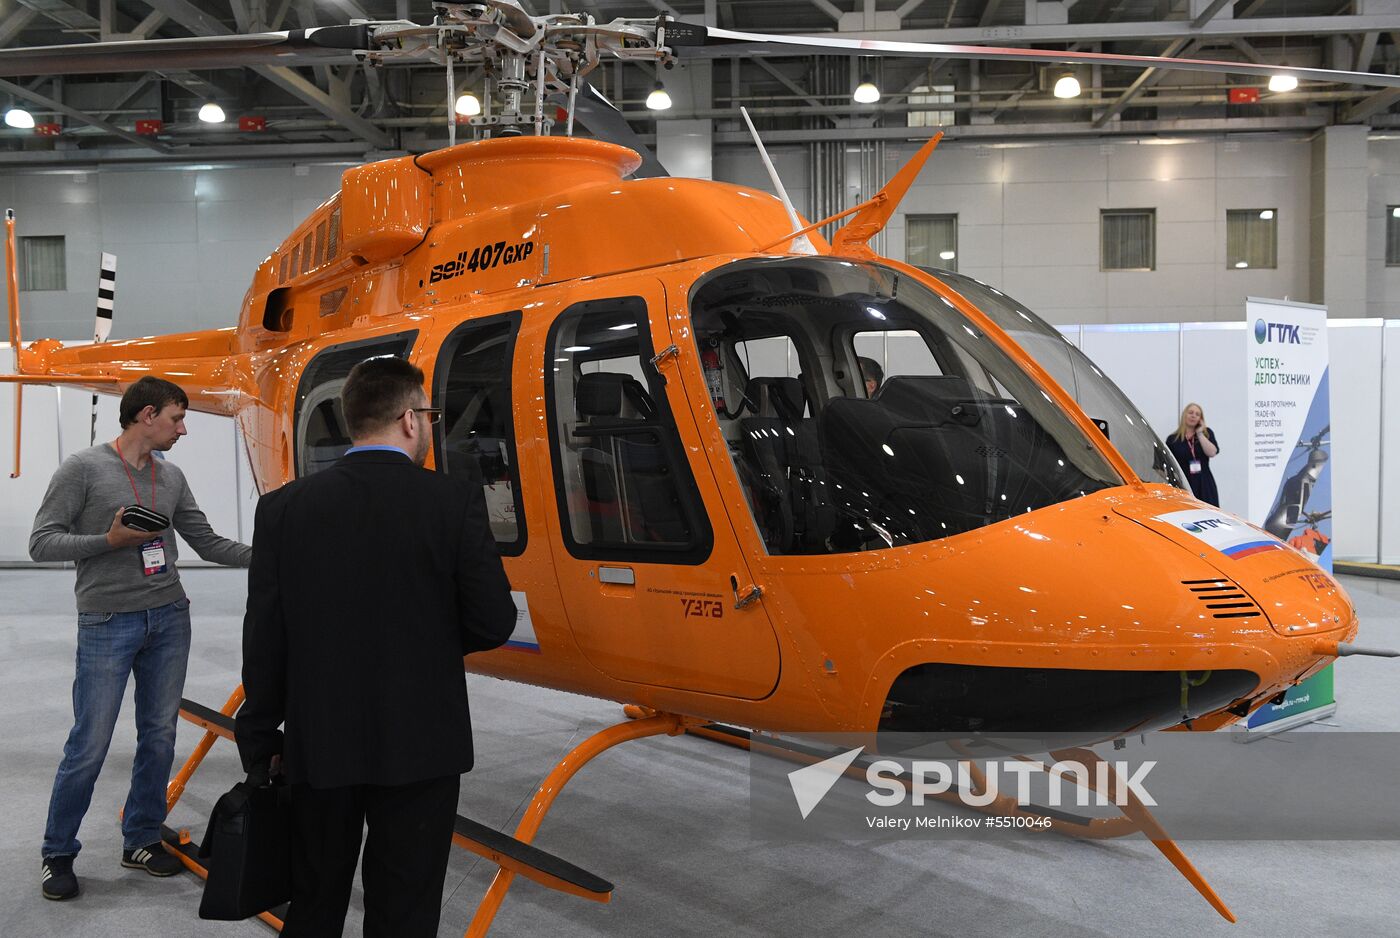 HeliRussia 2018 international helicopter industry fair